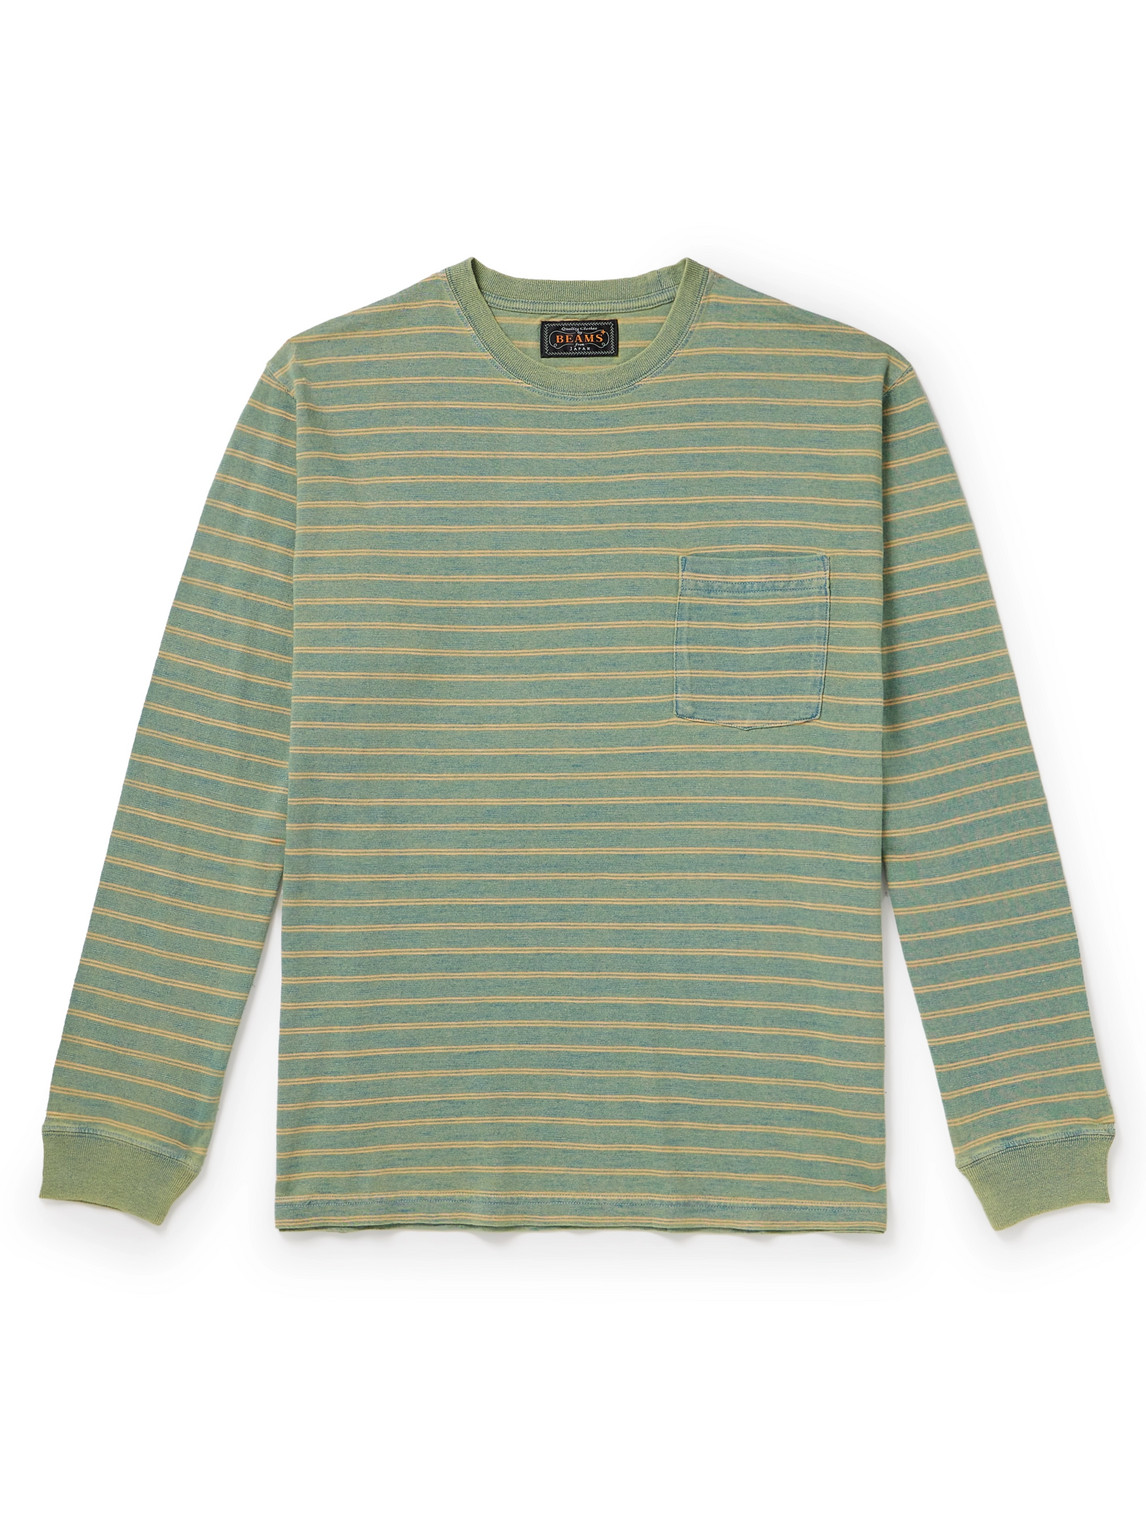 Beams Indigo Striped Cotton-jersey T-shirt In Green